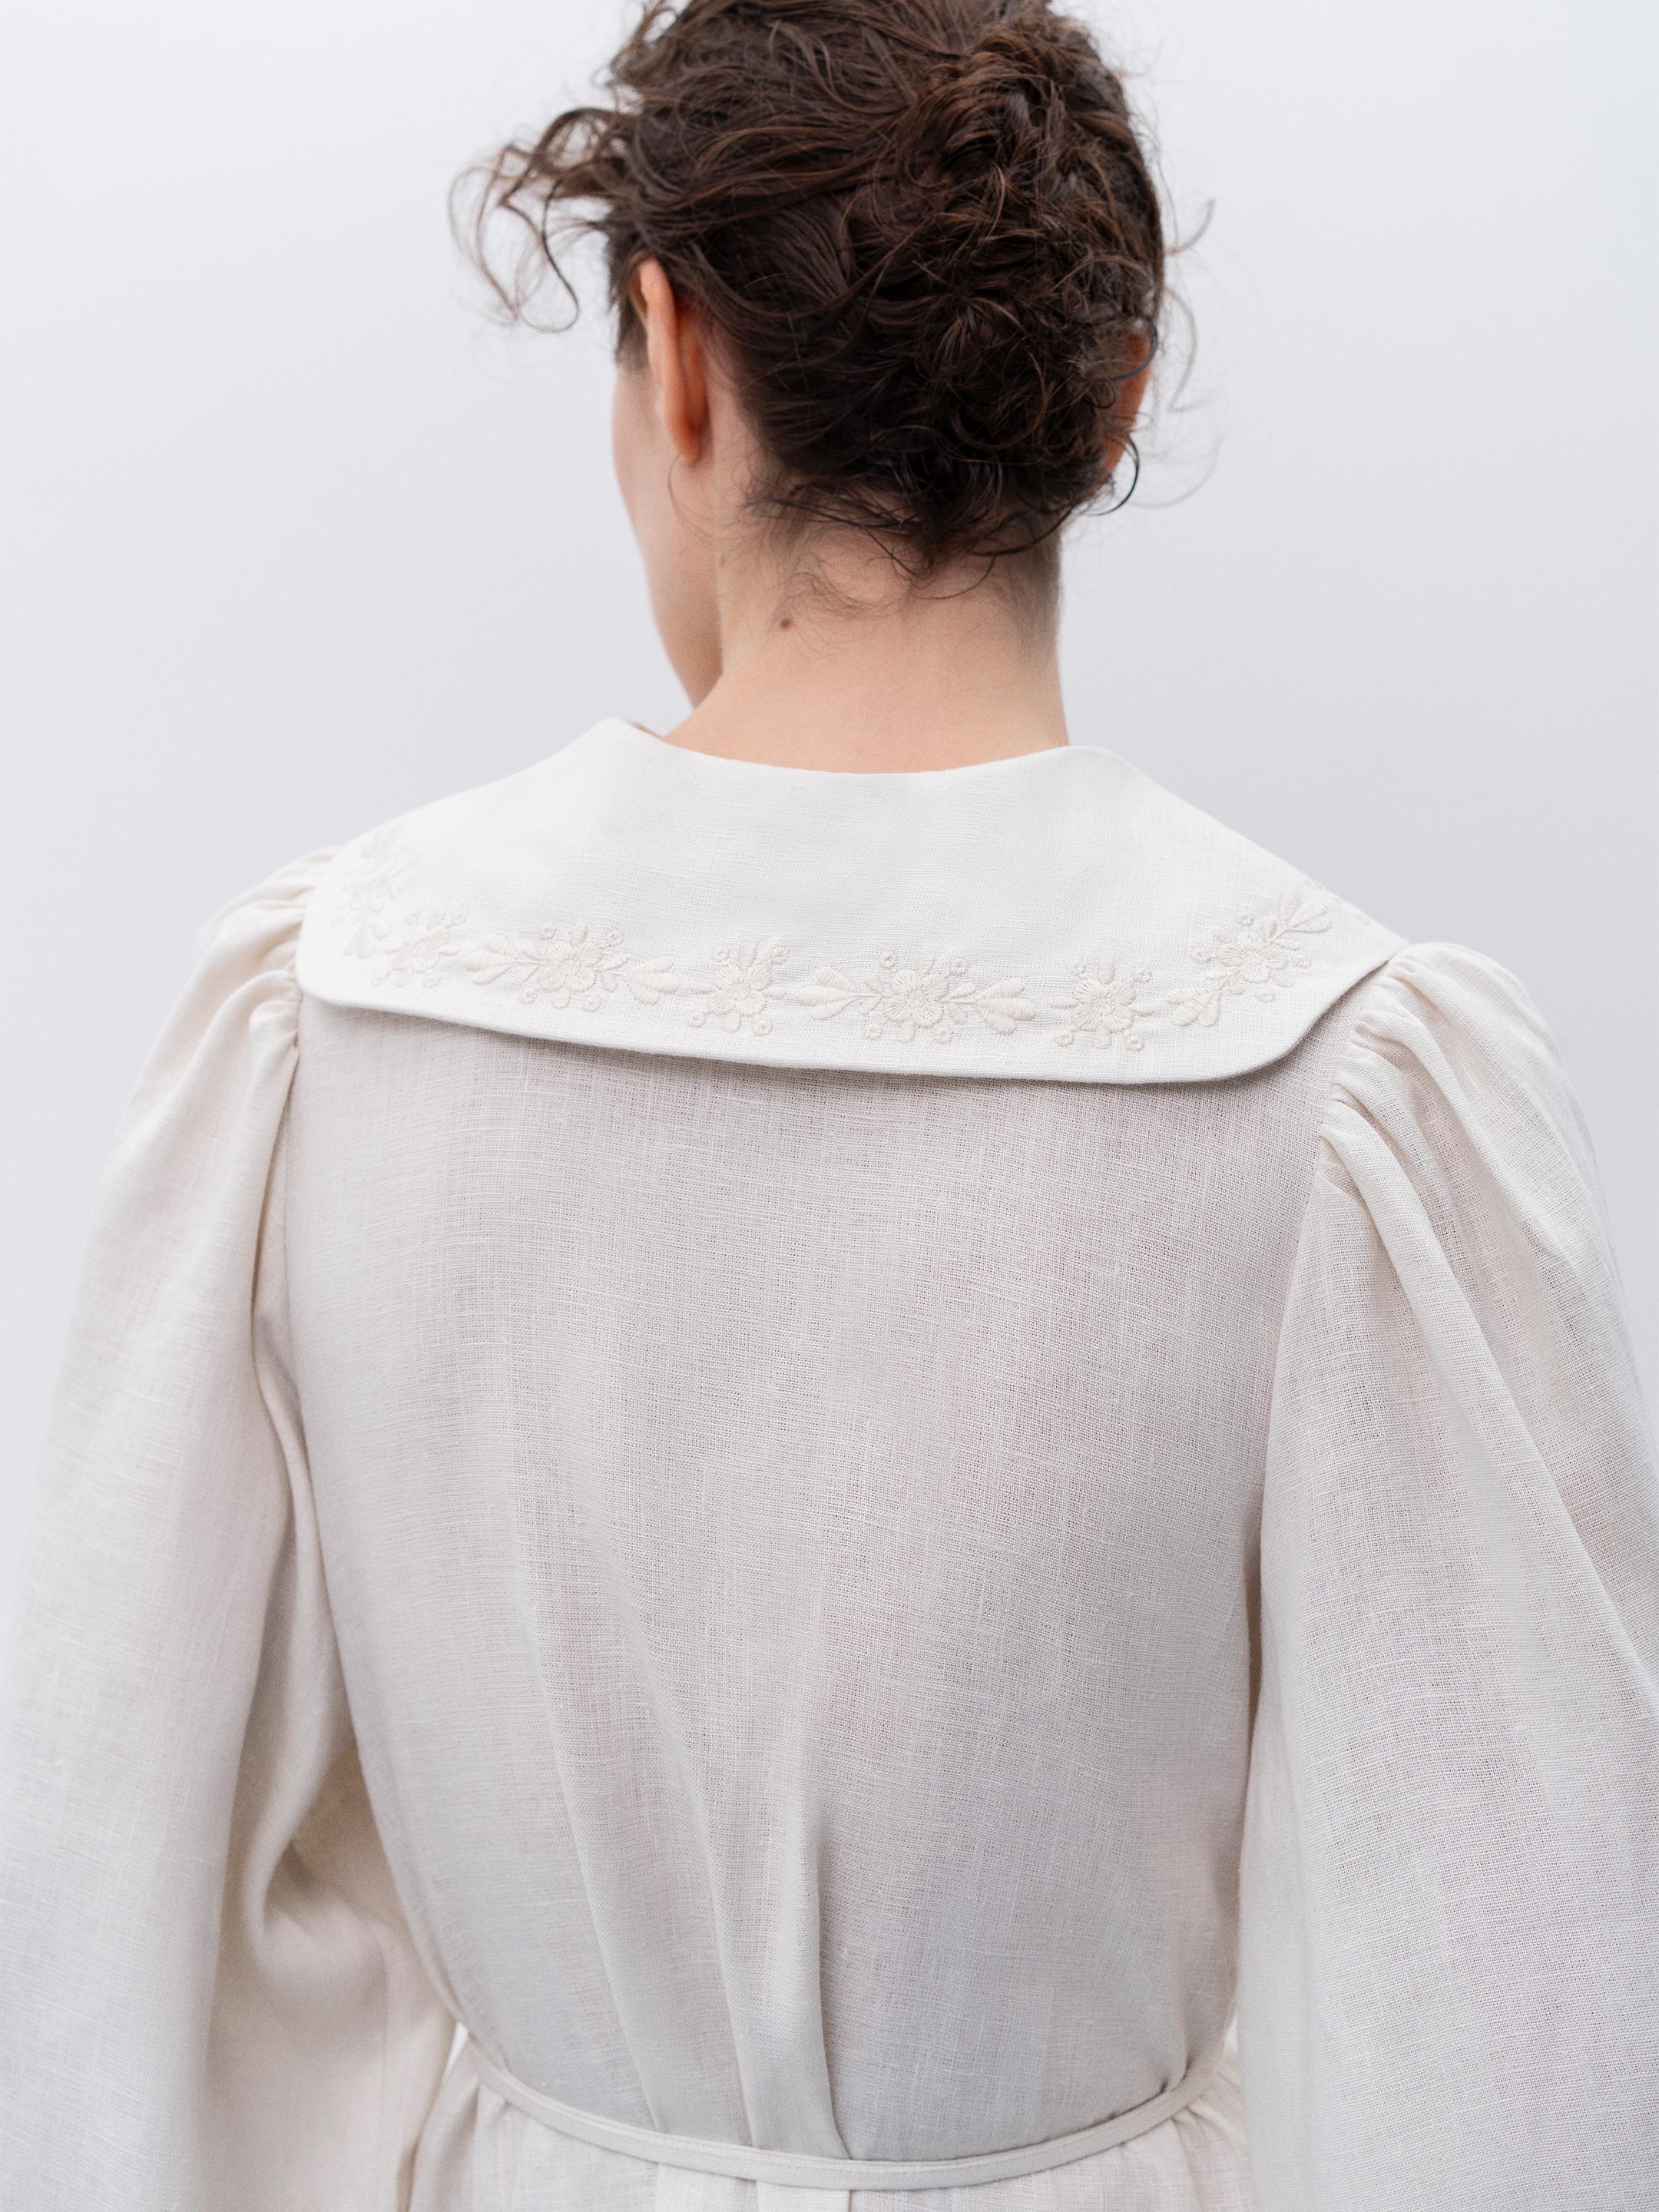 Linen dress with embroidery Pervotsvit Light - photo 2